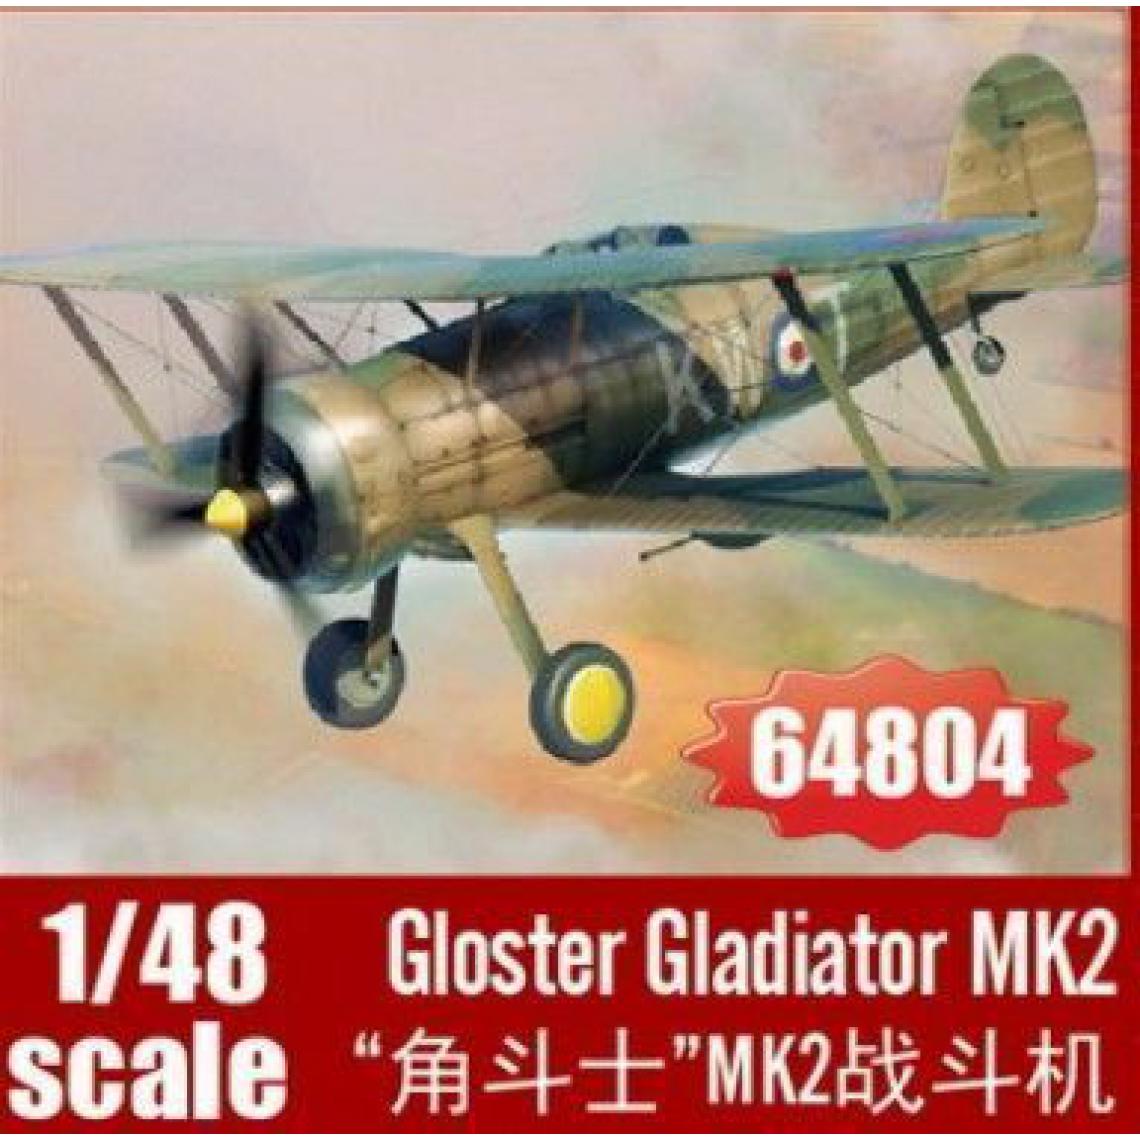 I Love Kit - Gloster Gladiator MK2 - 1:48e - I LOVE KIT - Accessoires et pièces